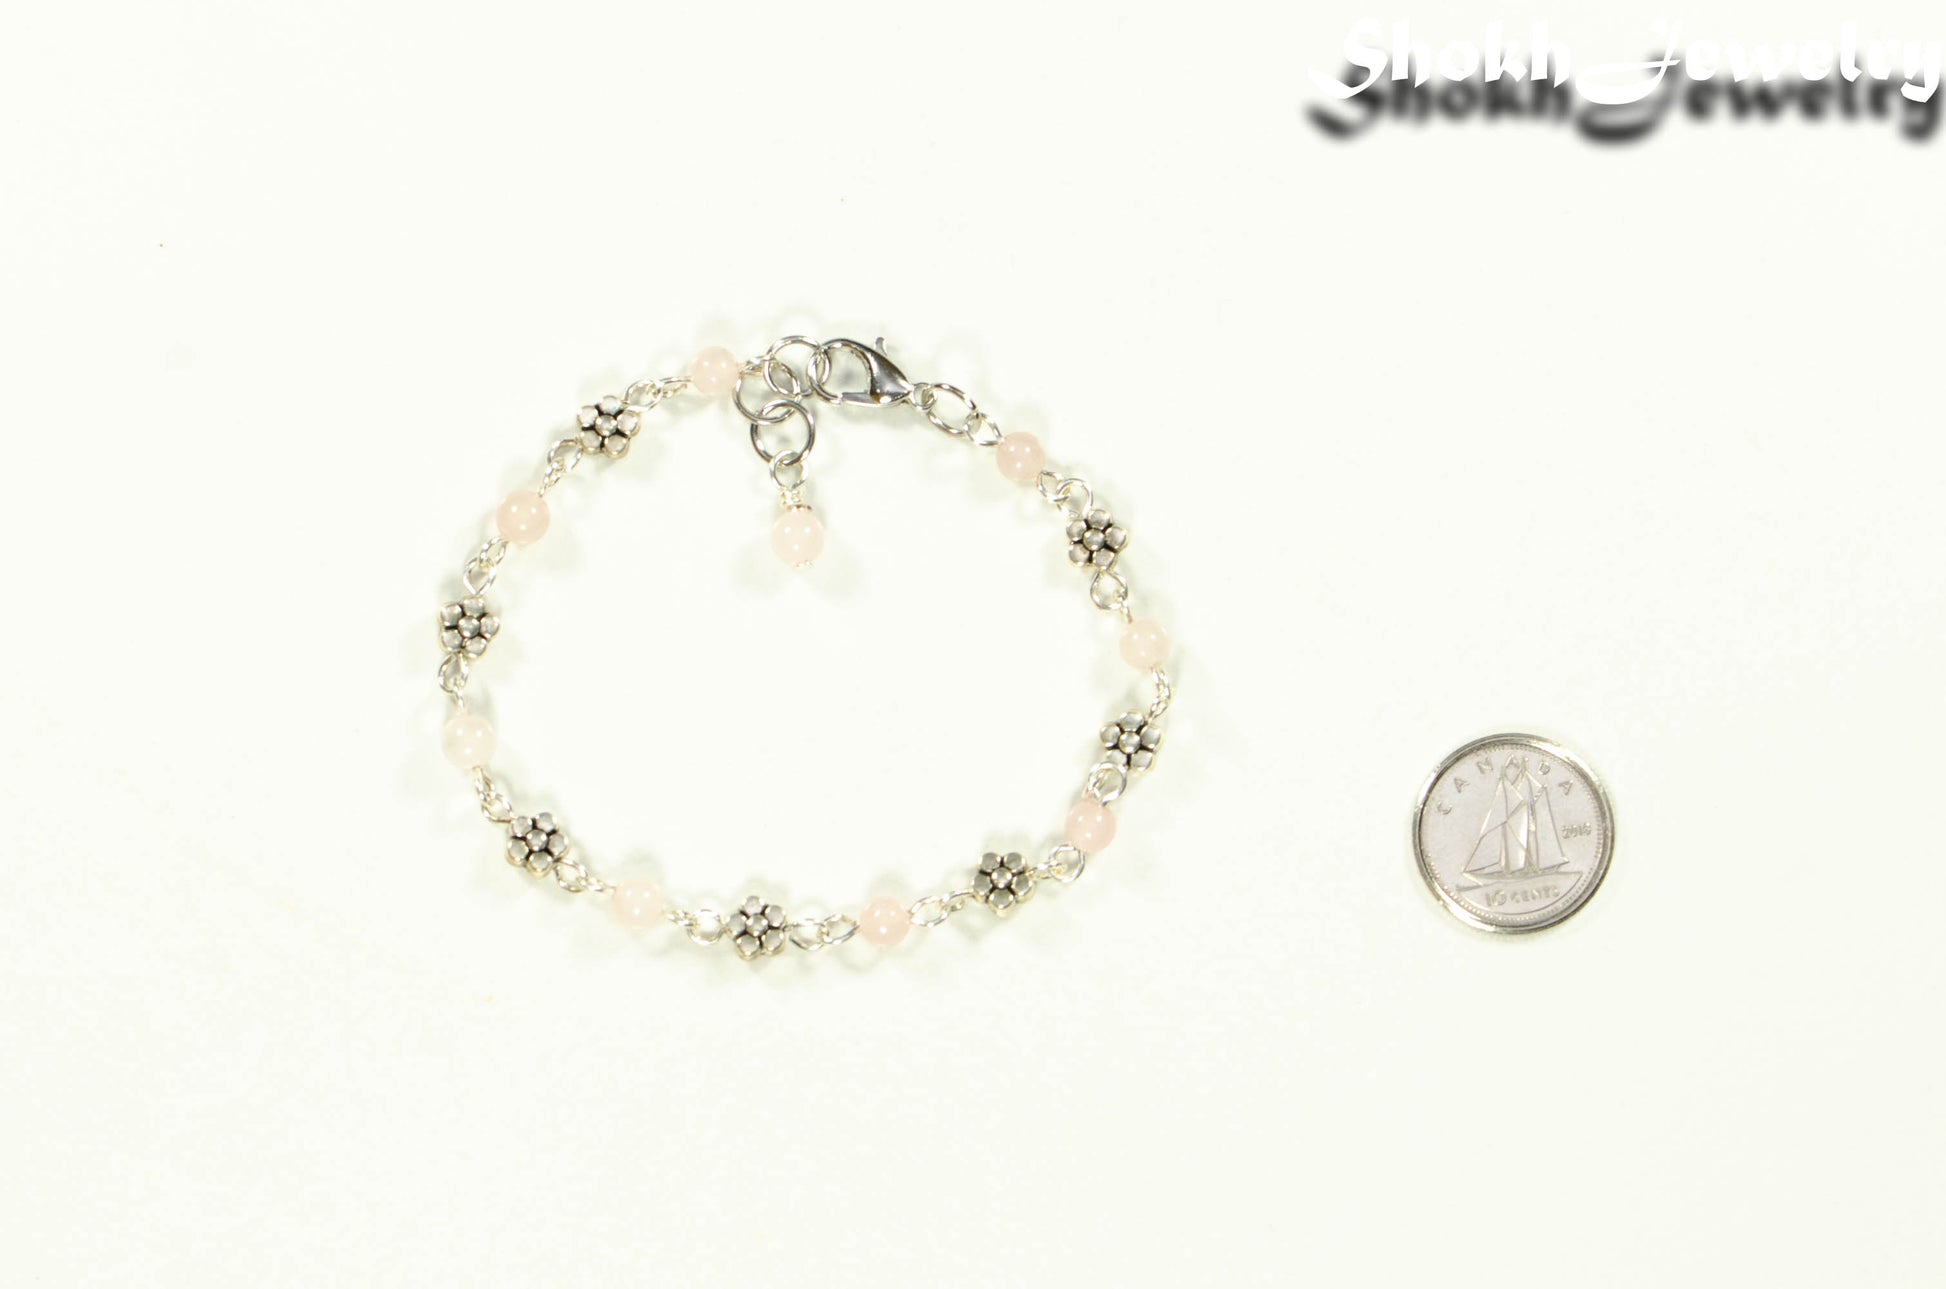 Tibetan Silver Flower and Rose Quartz Link Bracelet beside a dime.